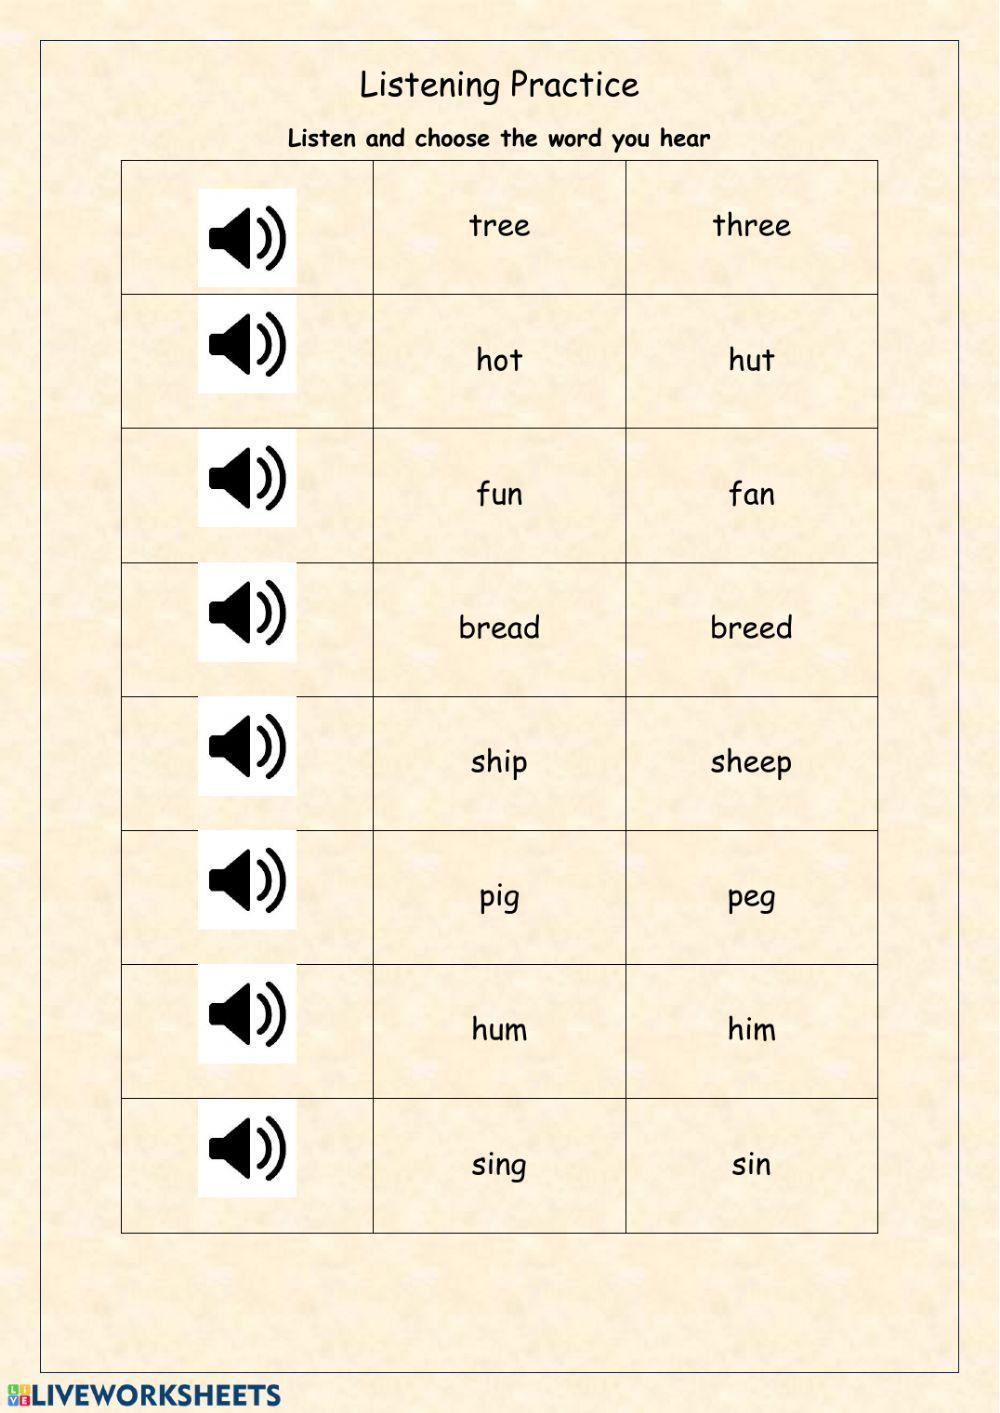 Pronunciation Practice